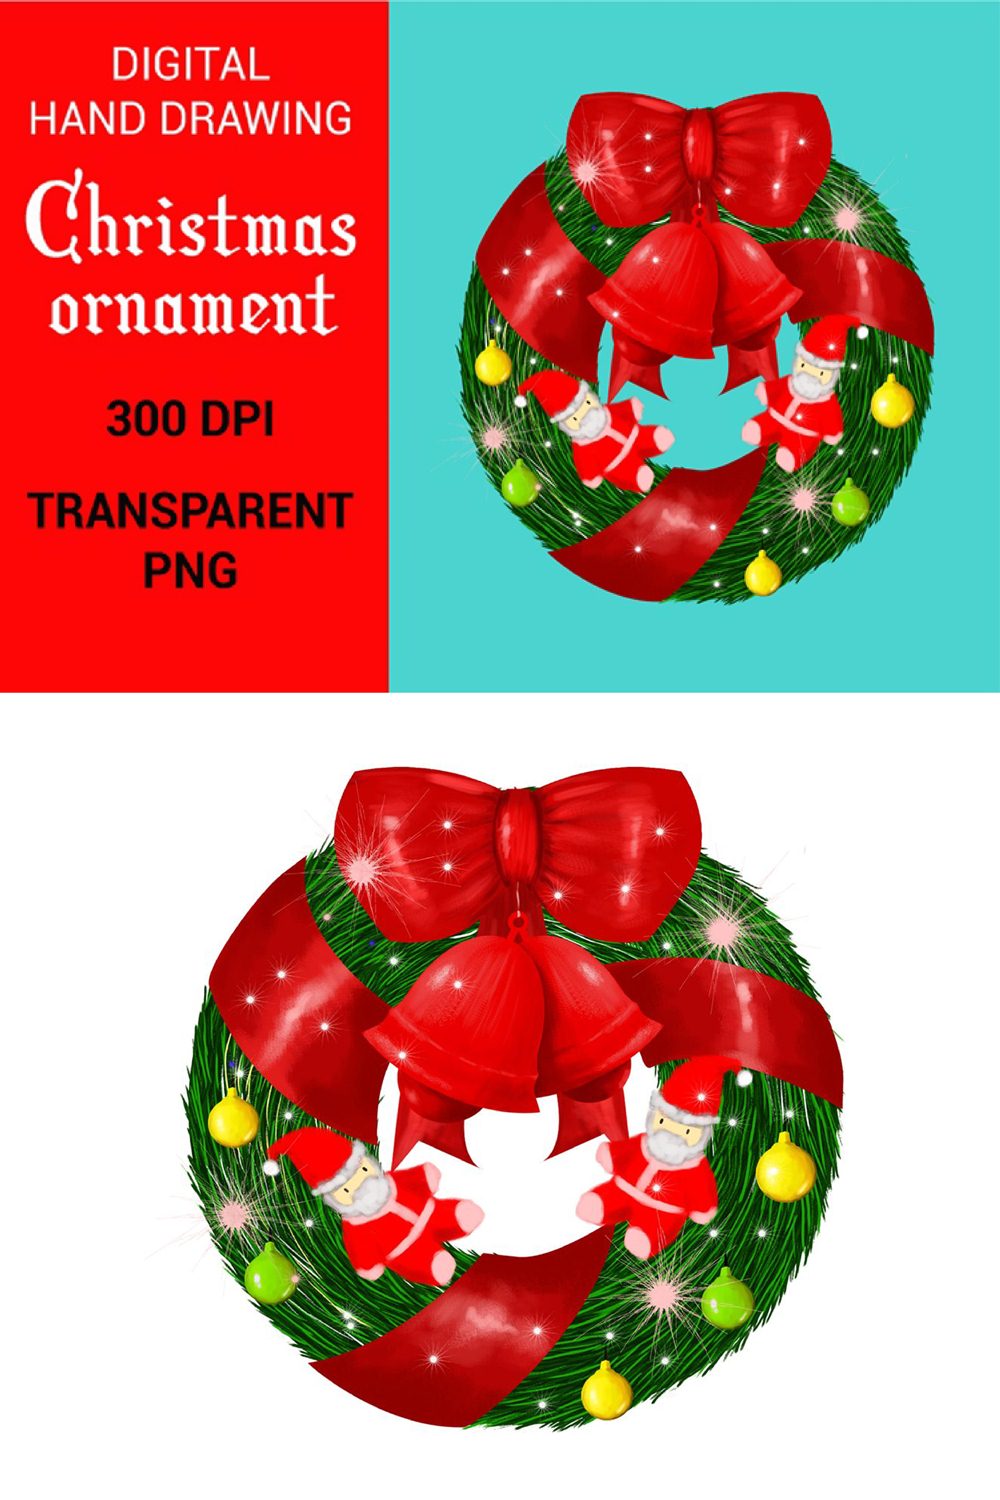 Digital Hand Drawing Christmas Ornament pinterest image.